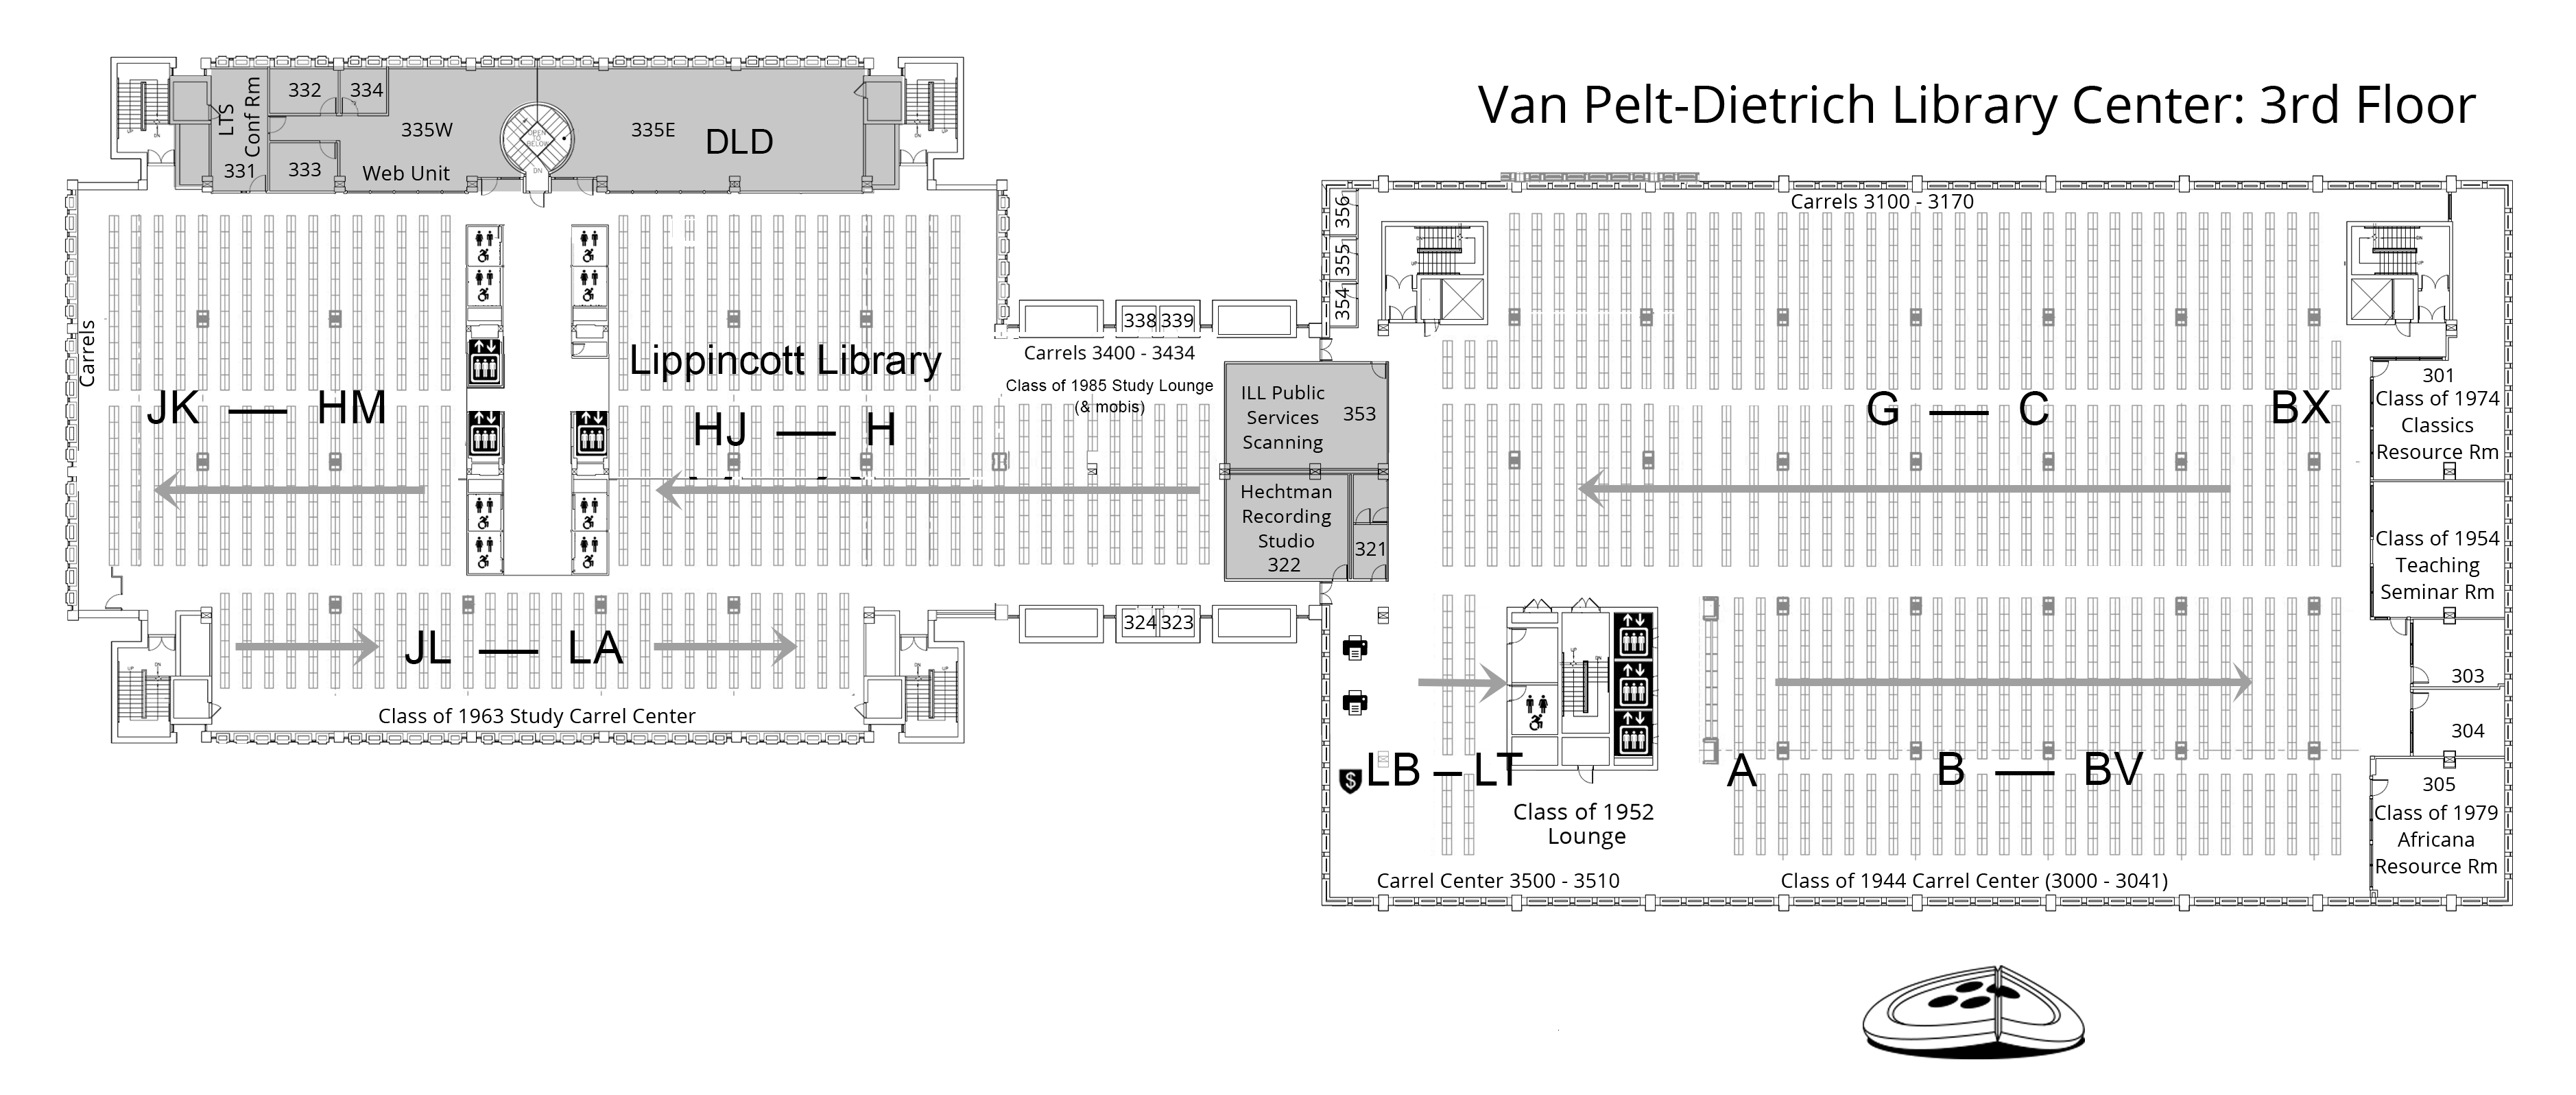 Van Pelt-Dietrich Library Center, third floor plan